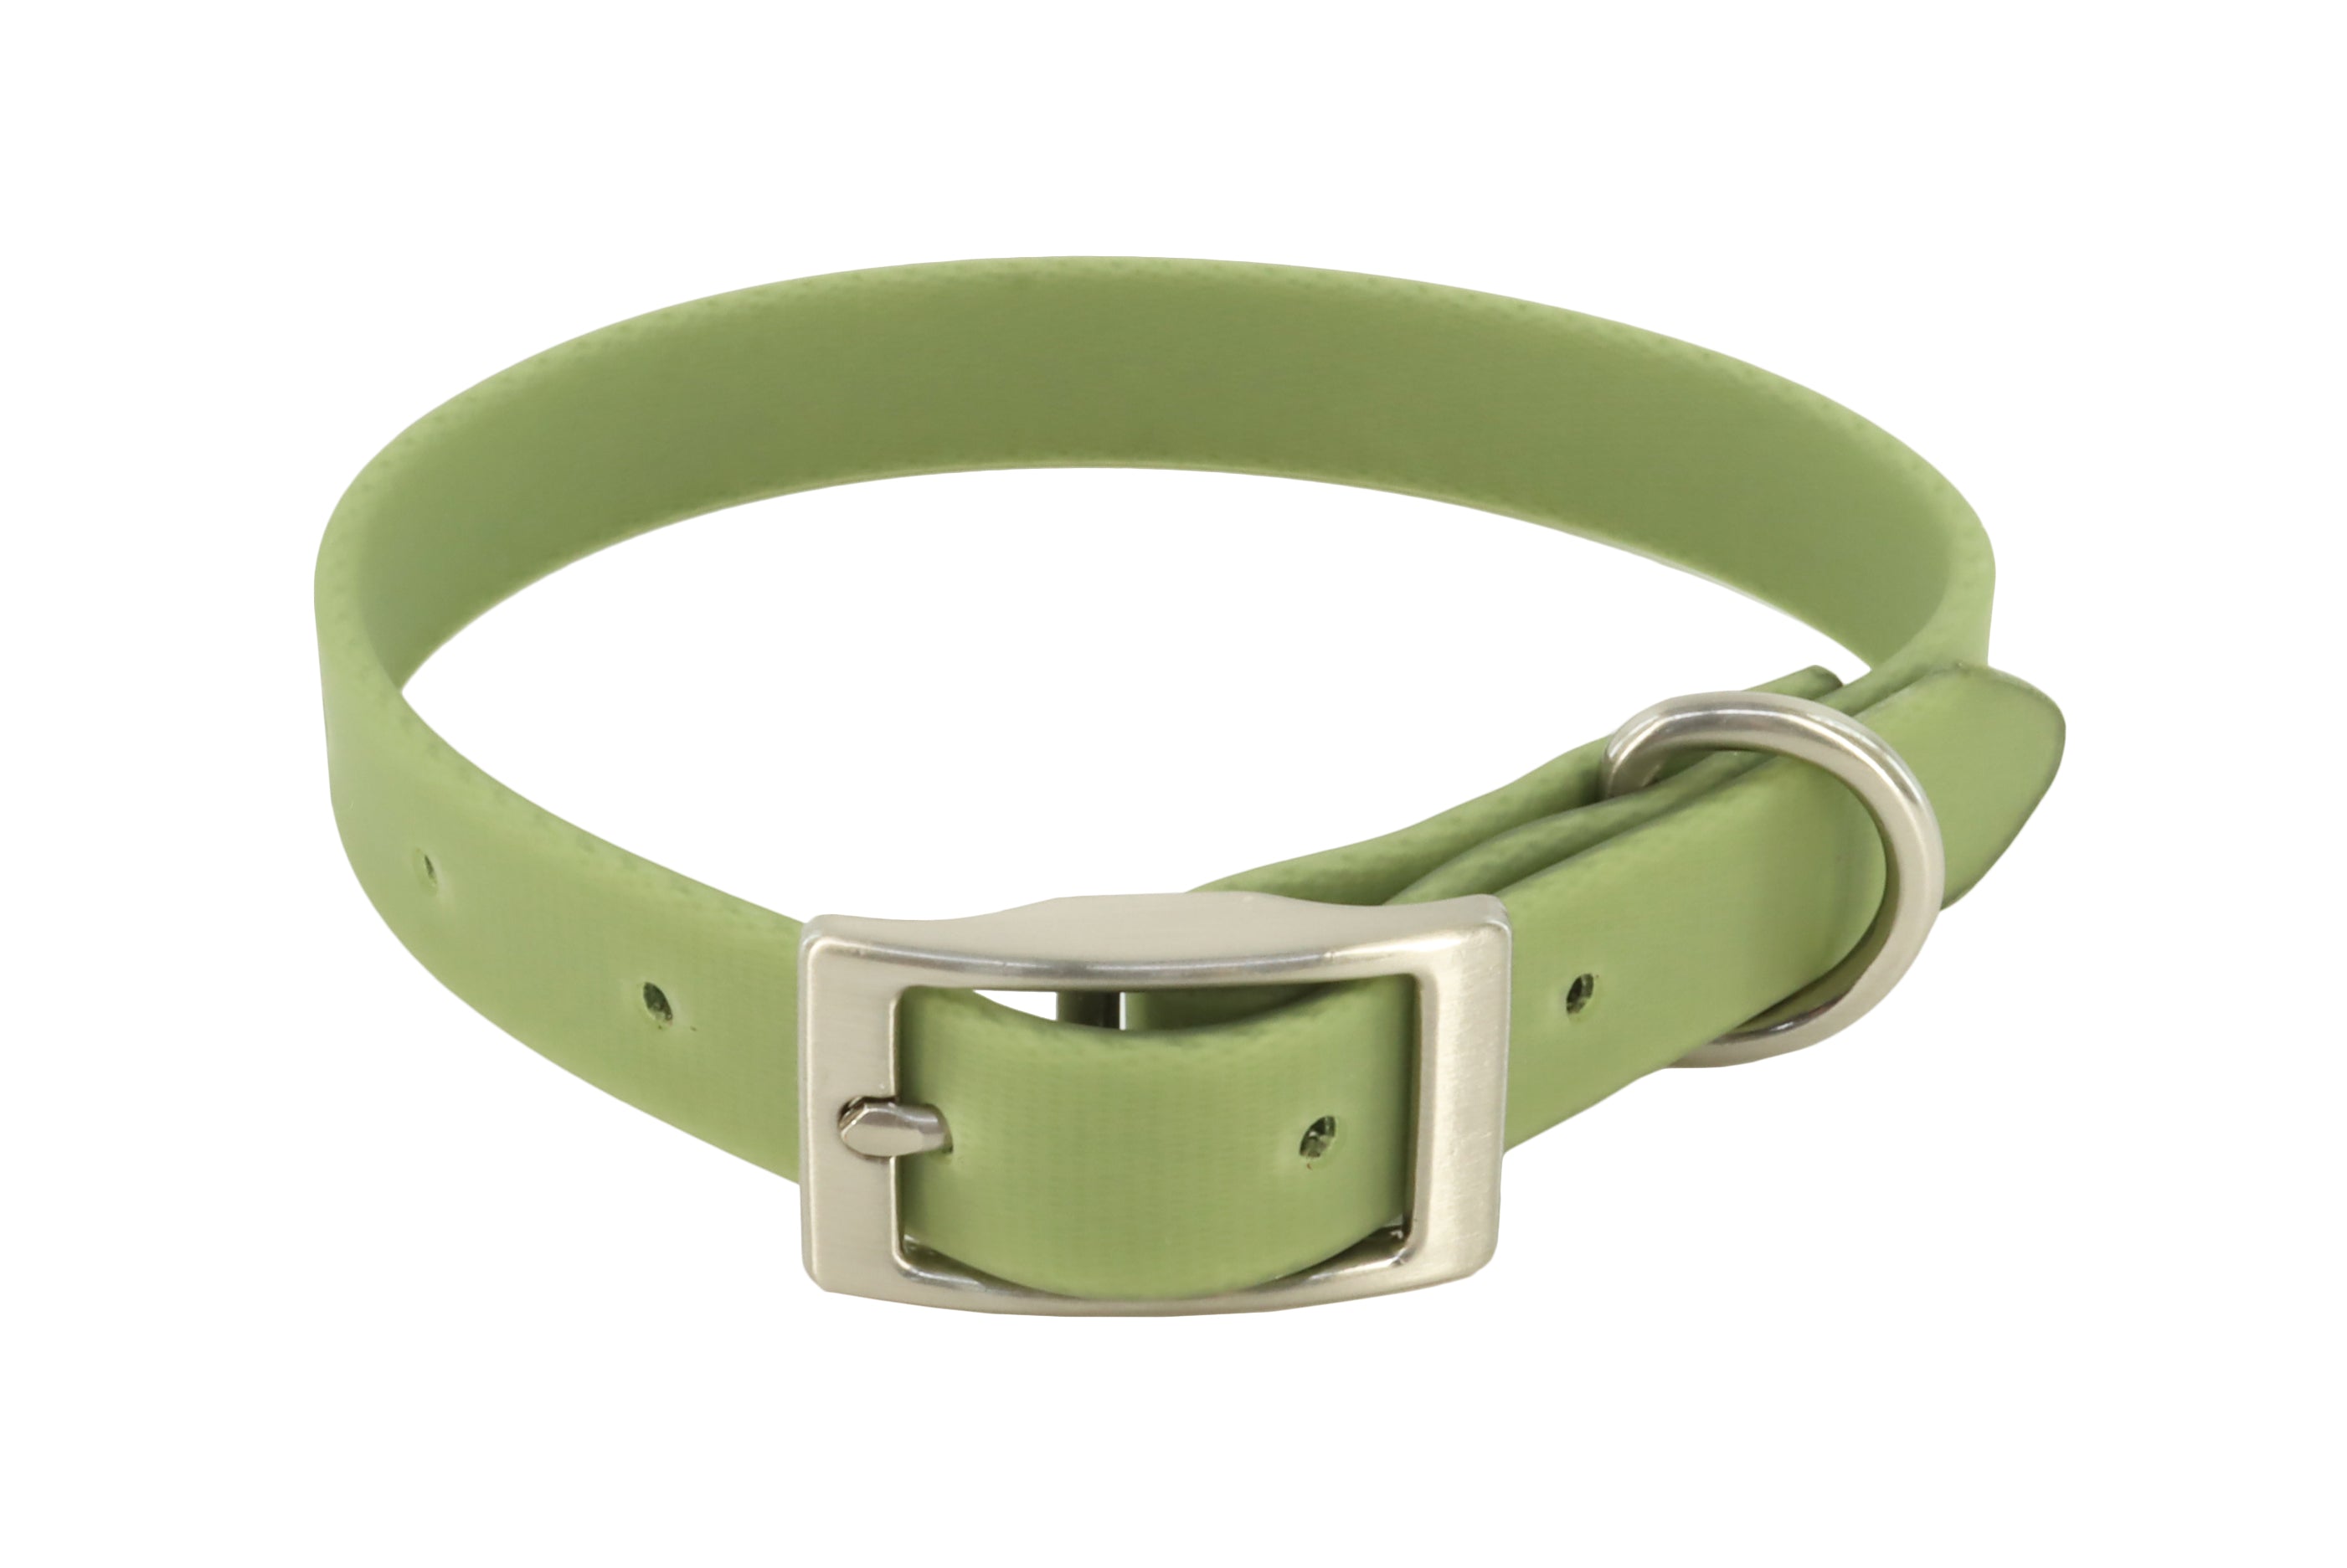 Solid Olive Dog Collar